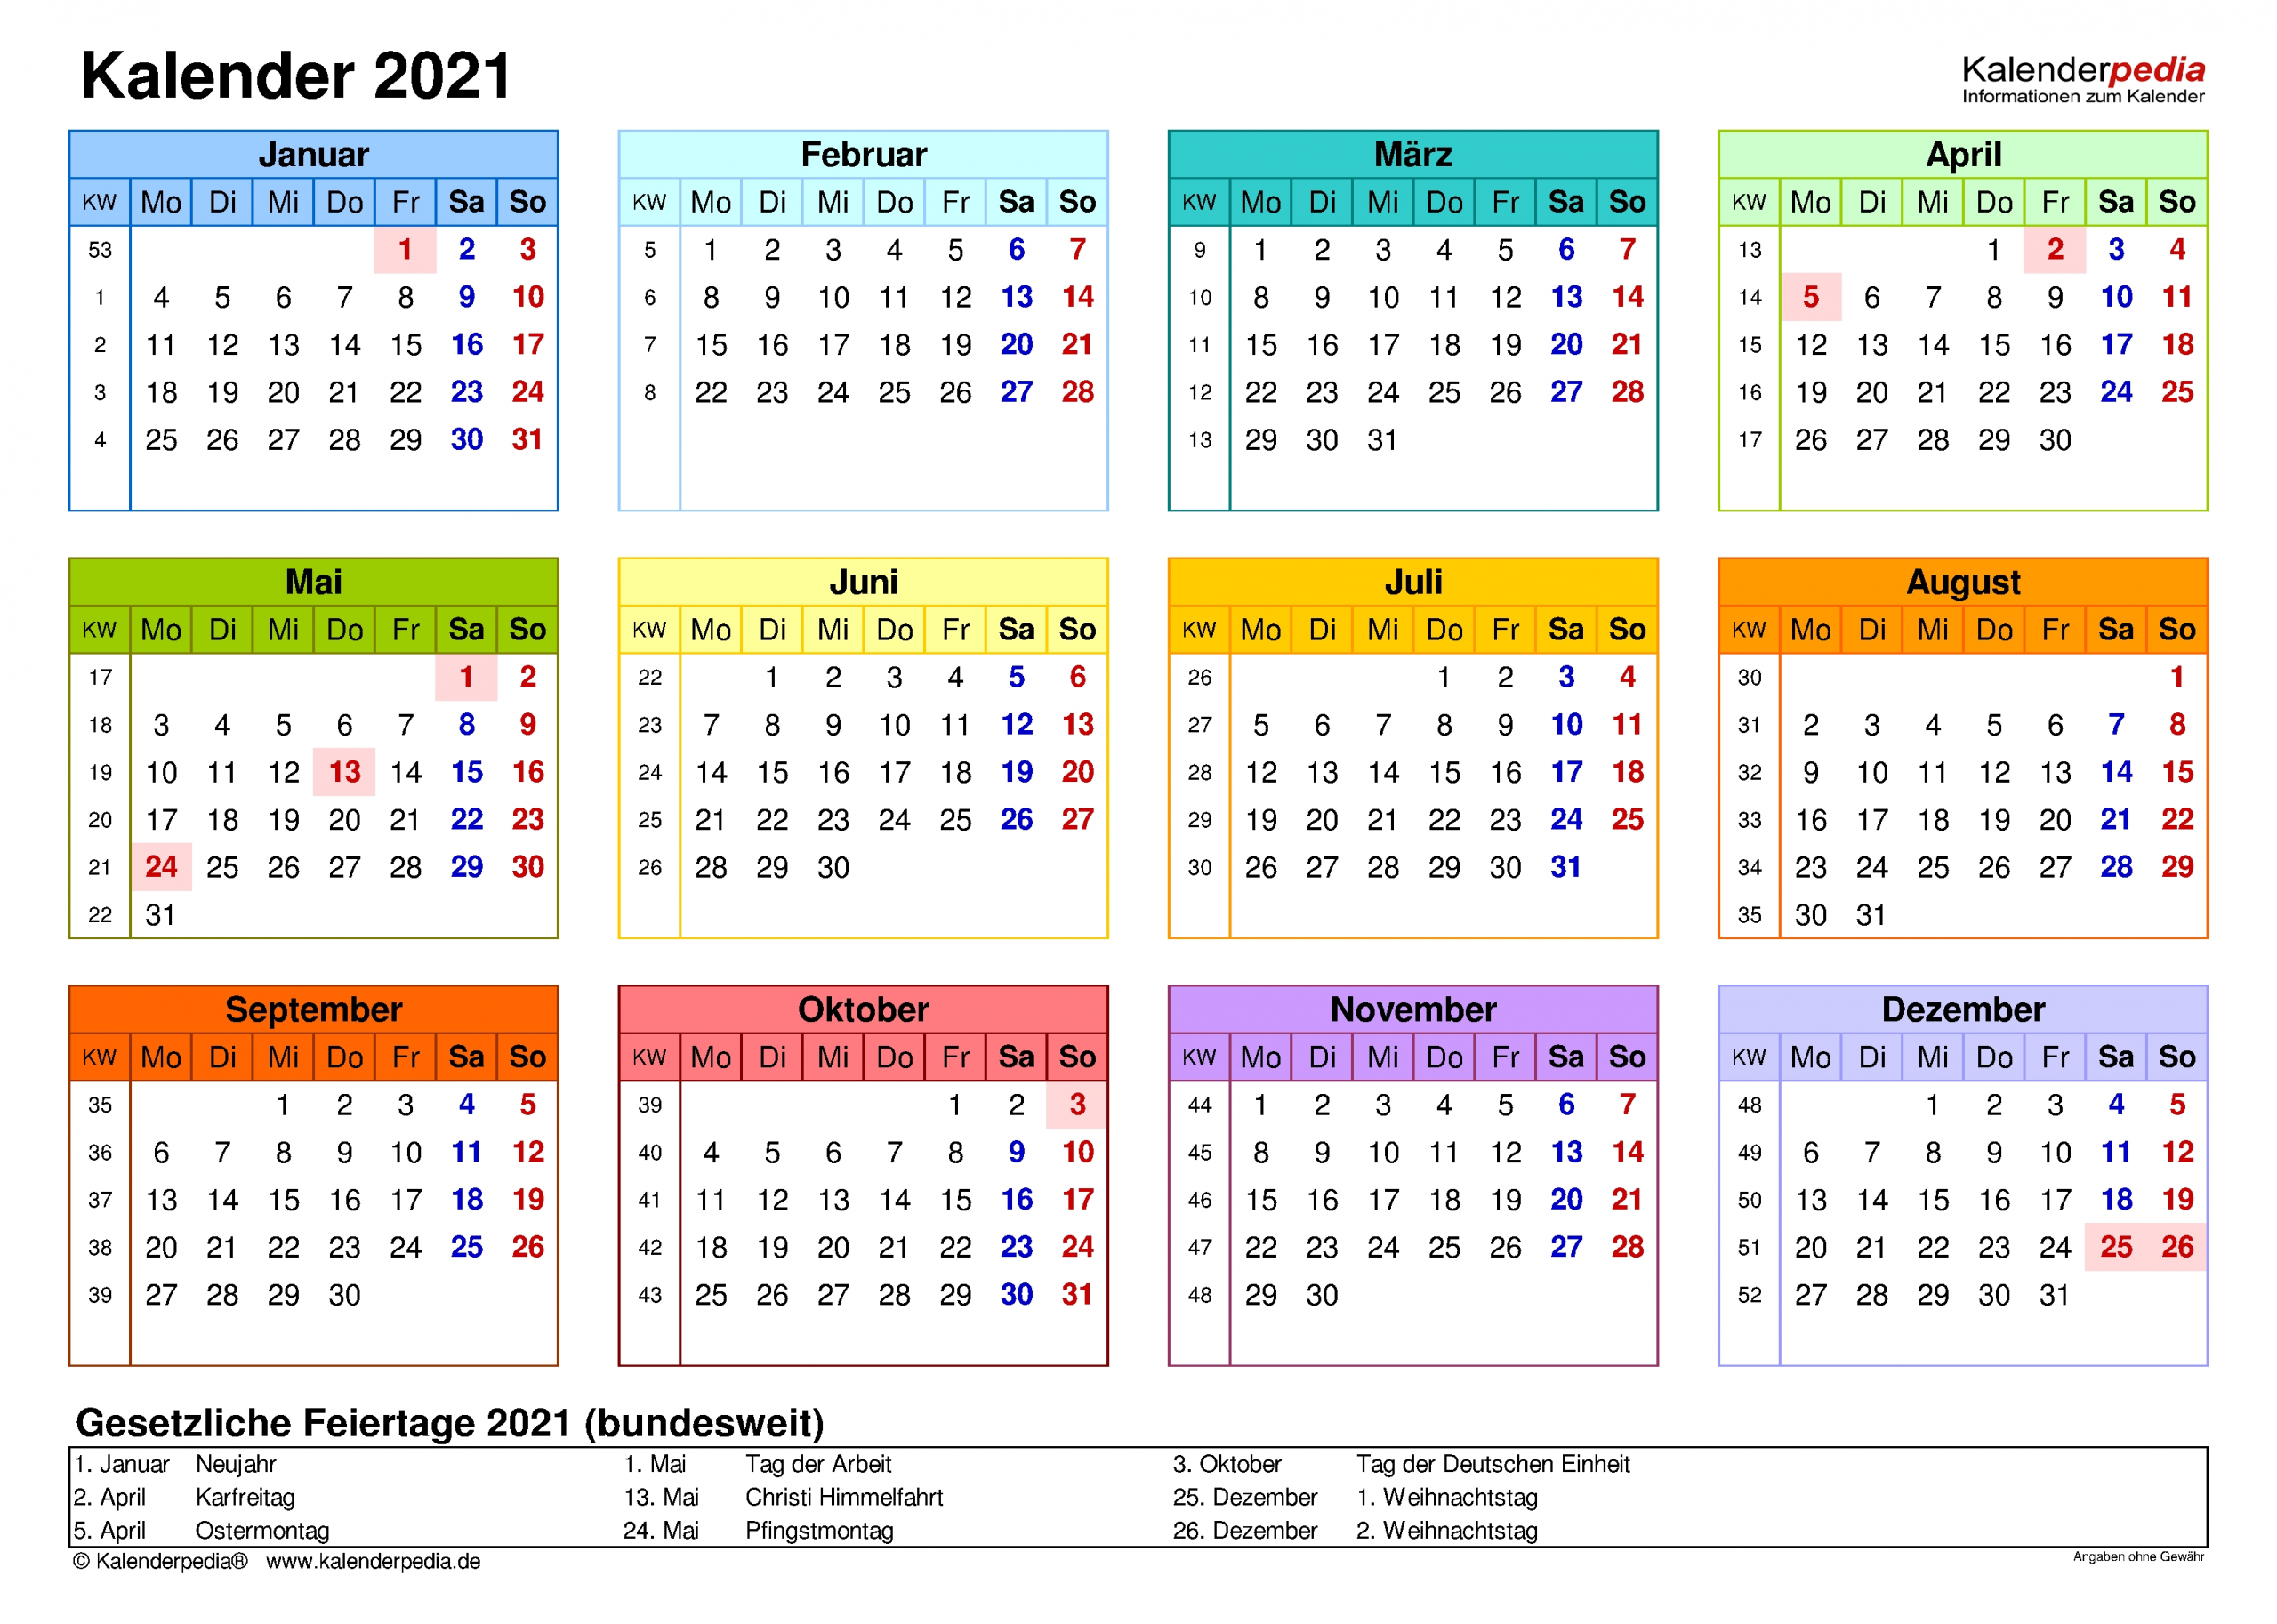 Take Jahreskalender 2021 Gross